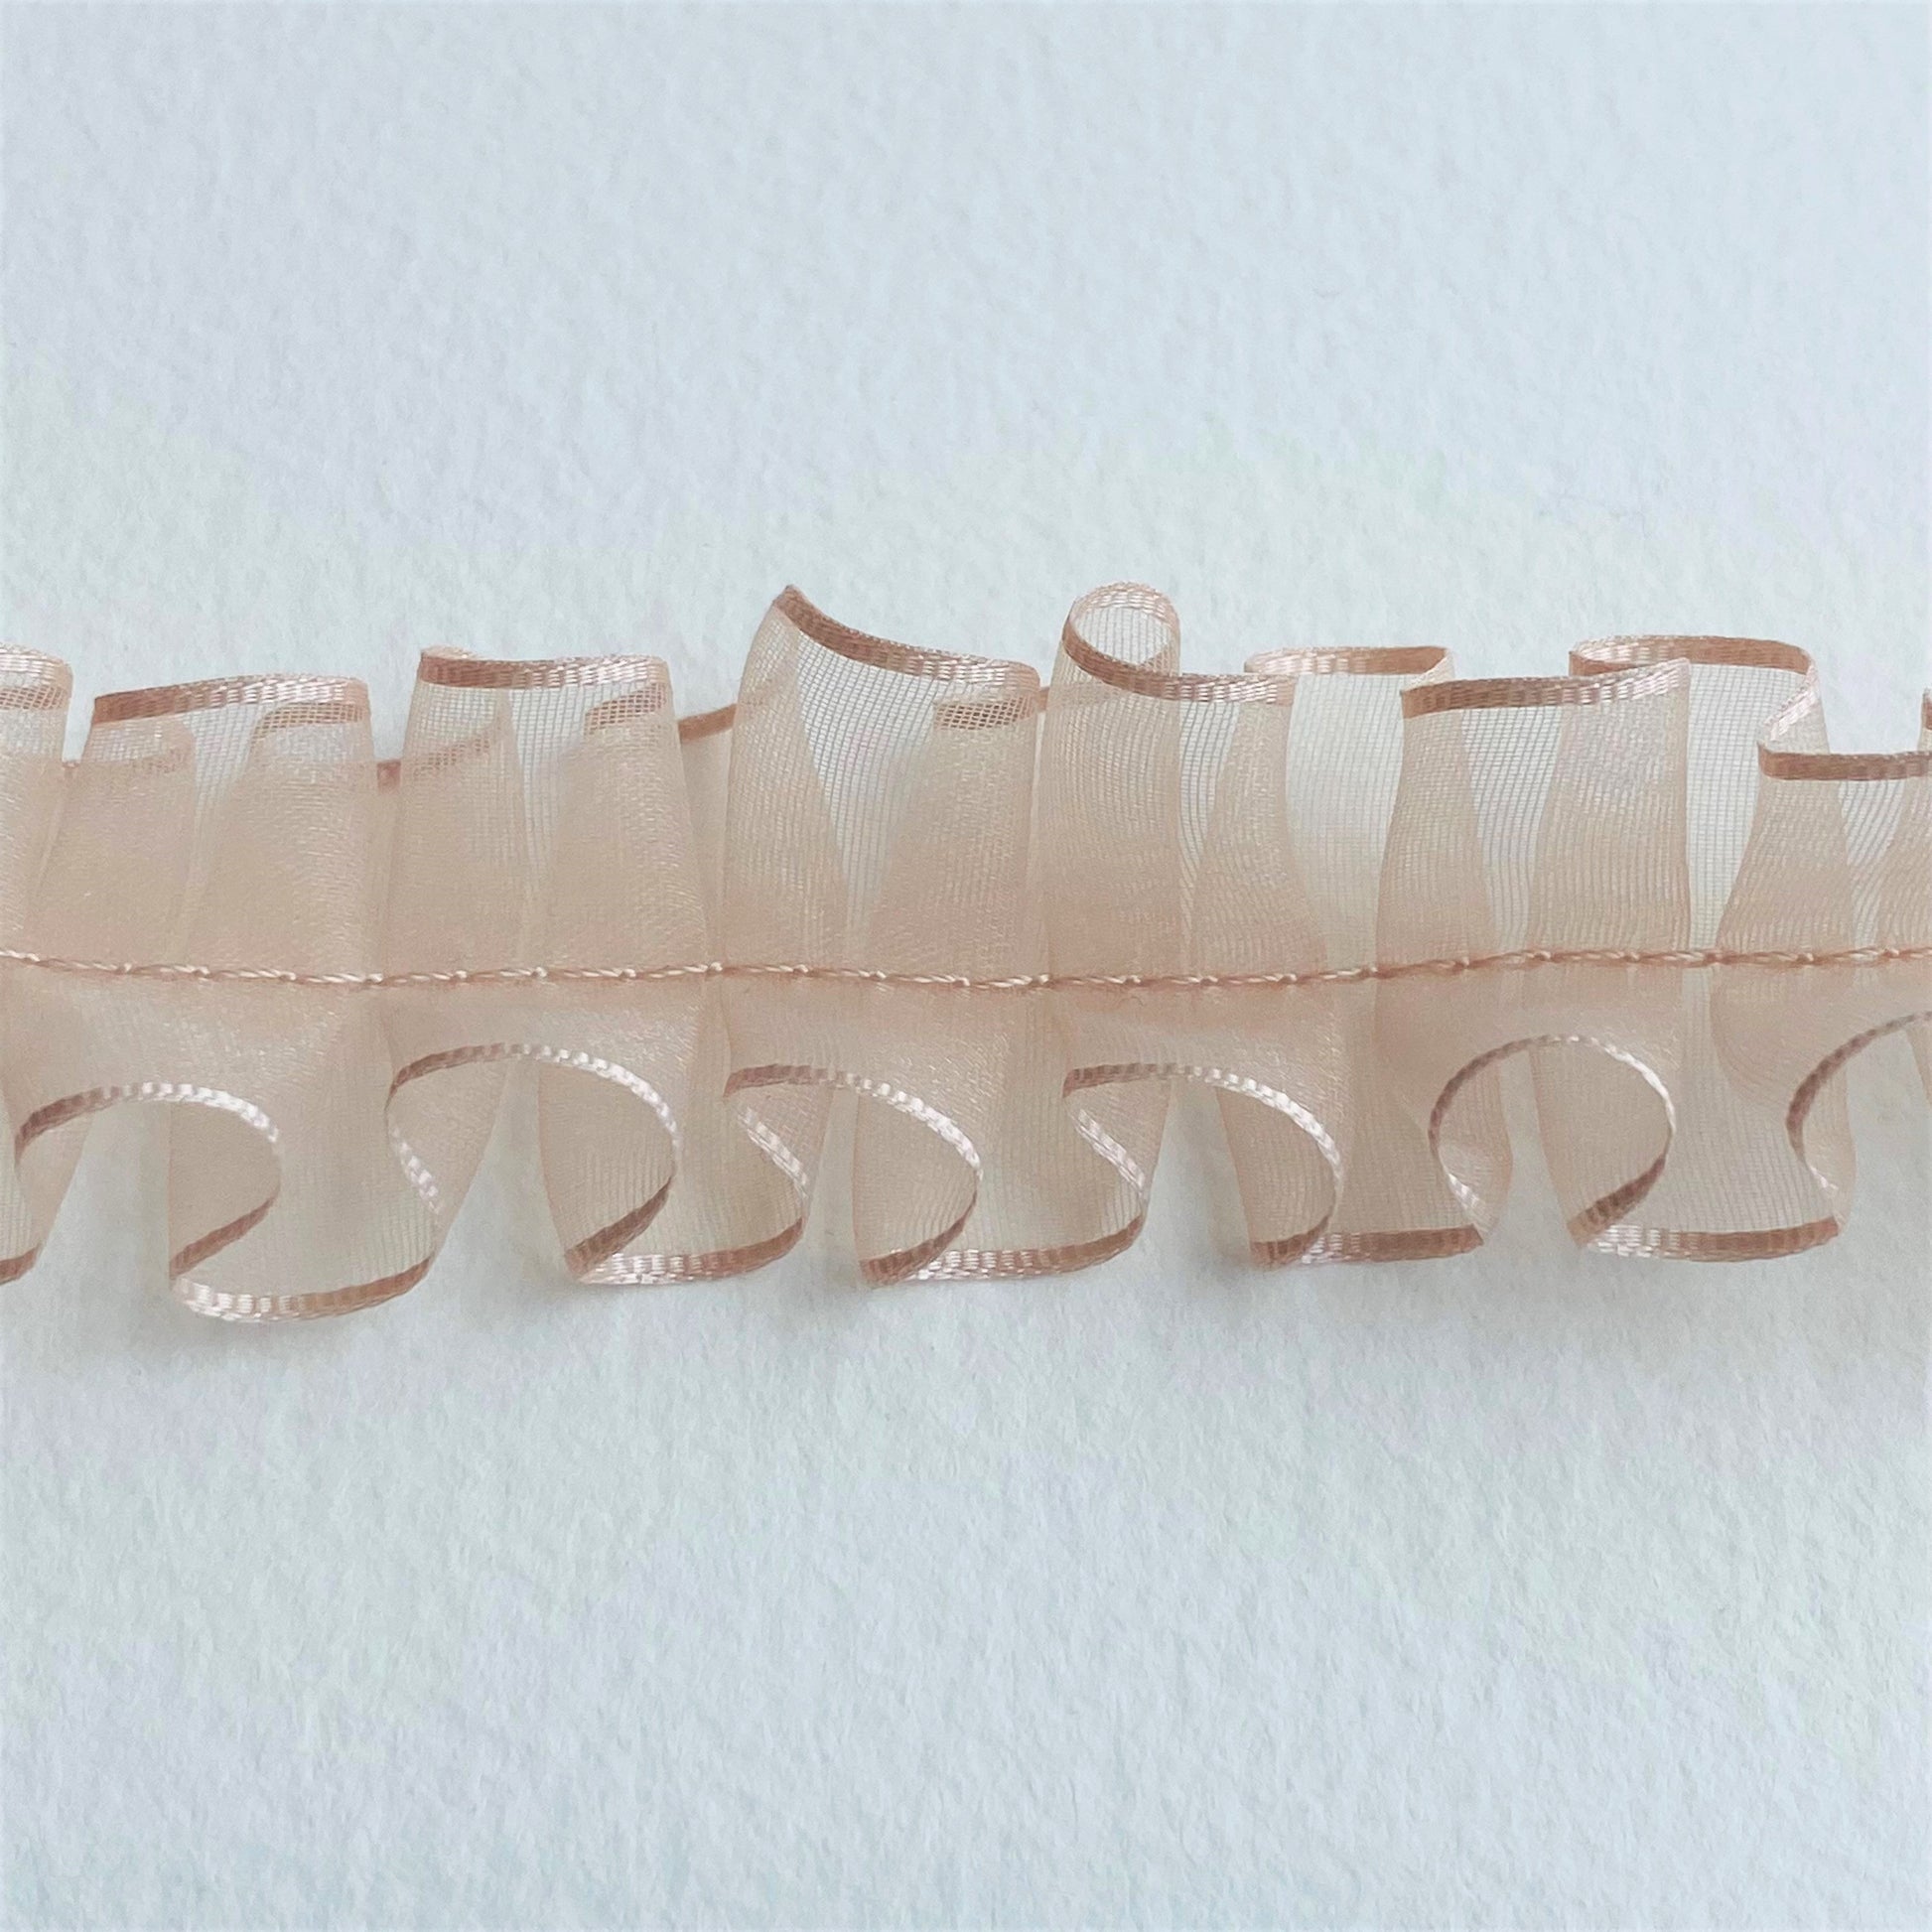 24mm Pleated Georgette ribbon by MOKUBA Japanese ribbon in blush